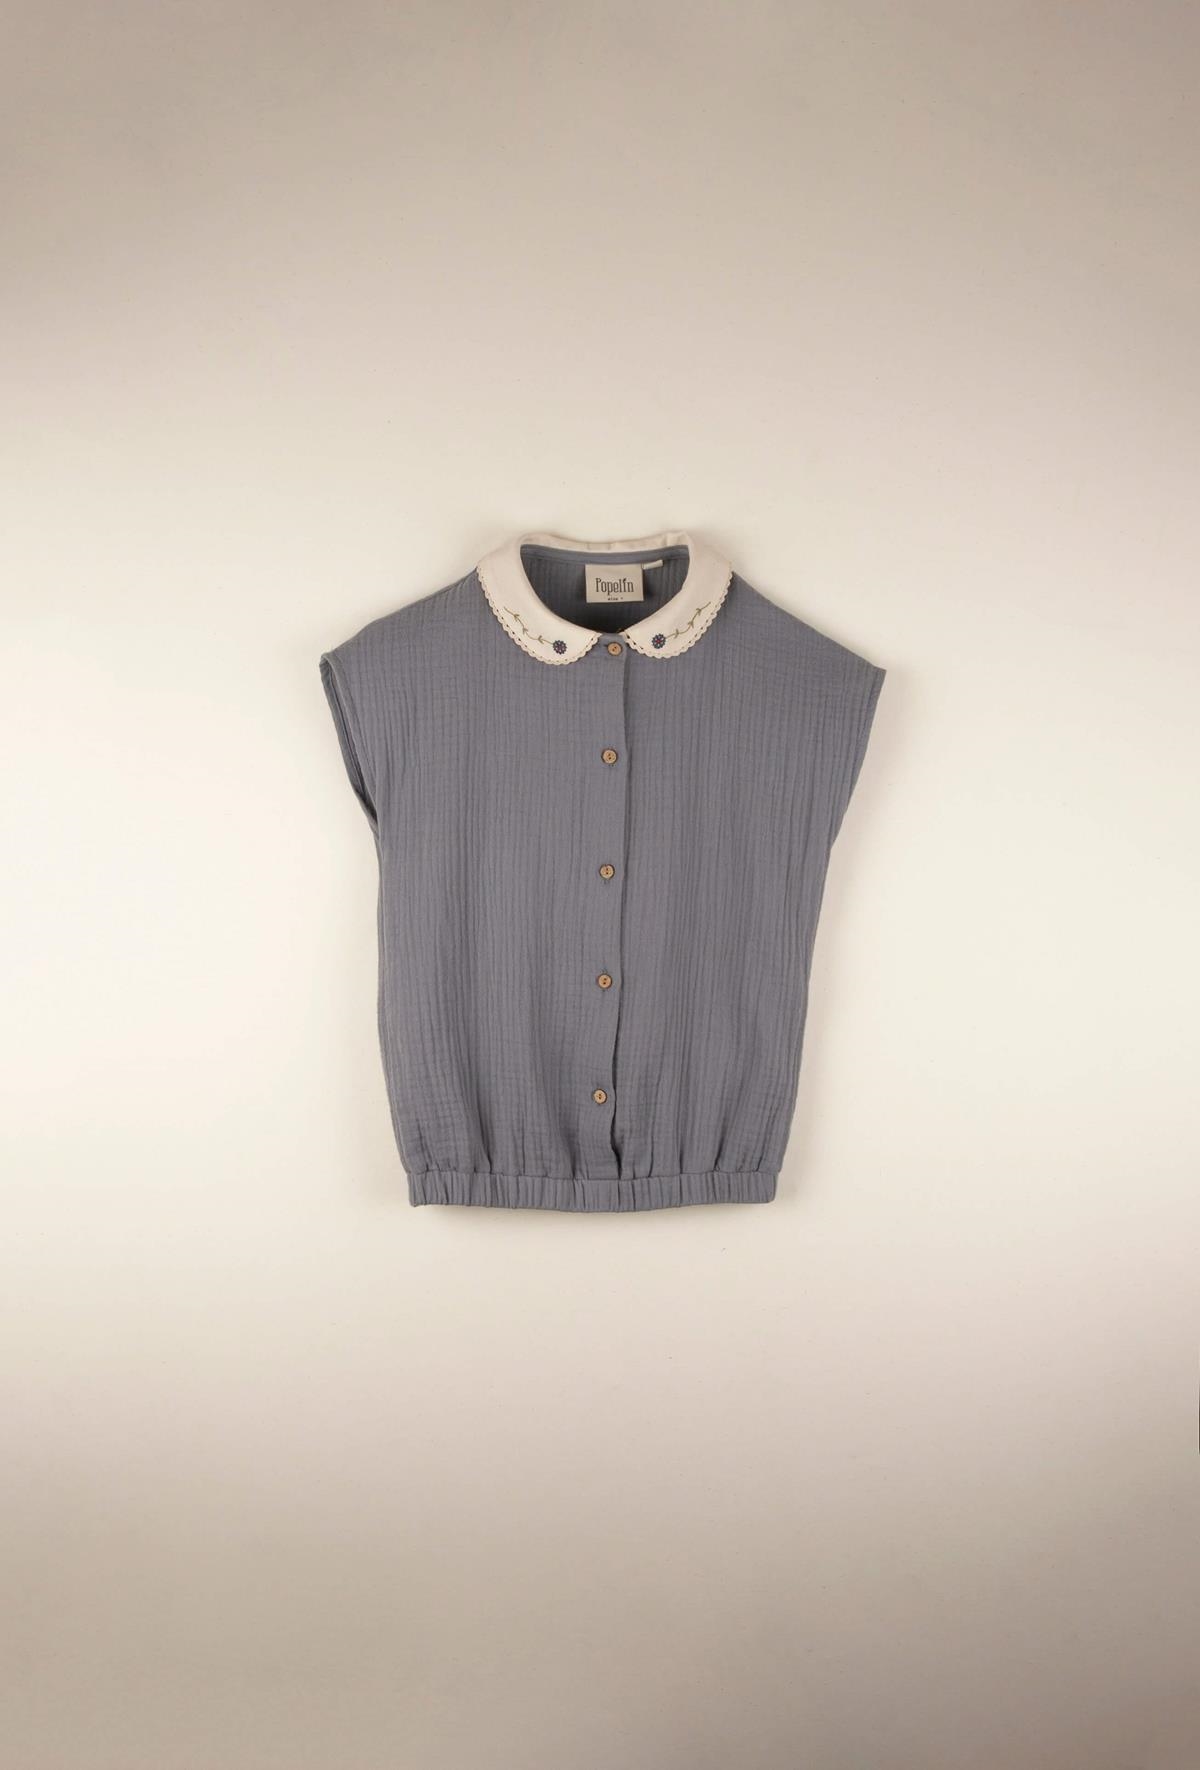 Mod.17.3 Greyish-blue organic blouse with embroidered collar | SS22 Mod.17.3 Greyish-blue organic blouse with embroidered collar | 1